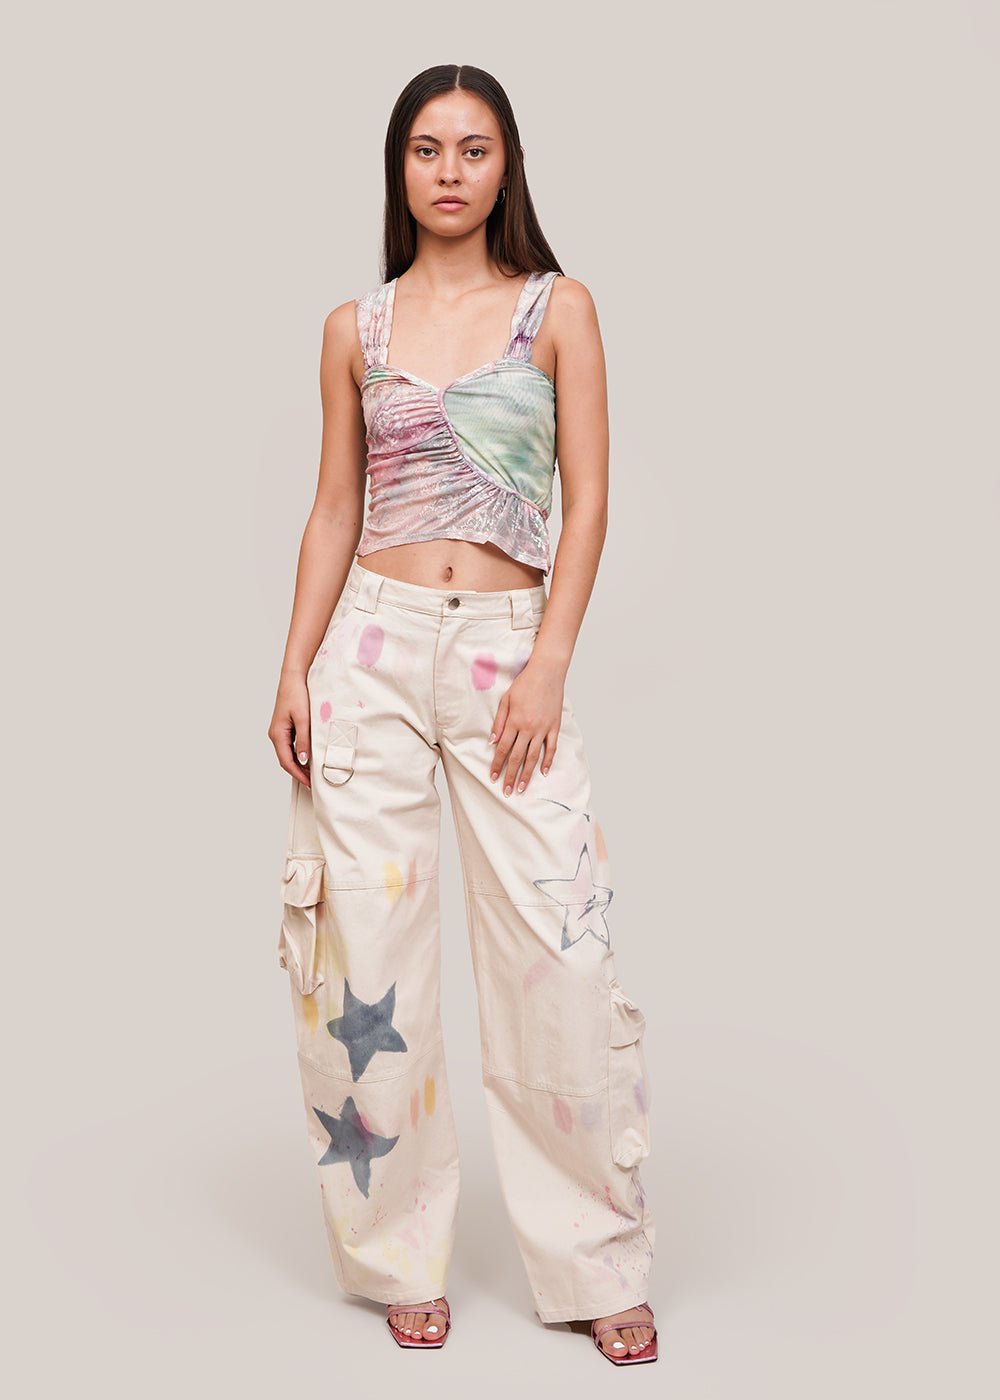 Collina Strada Light Chrysanthemum Maya Top - New Classics Studios Sustainable Ethical Fashion Canada